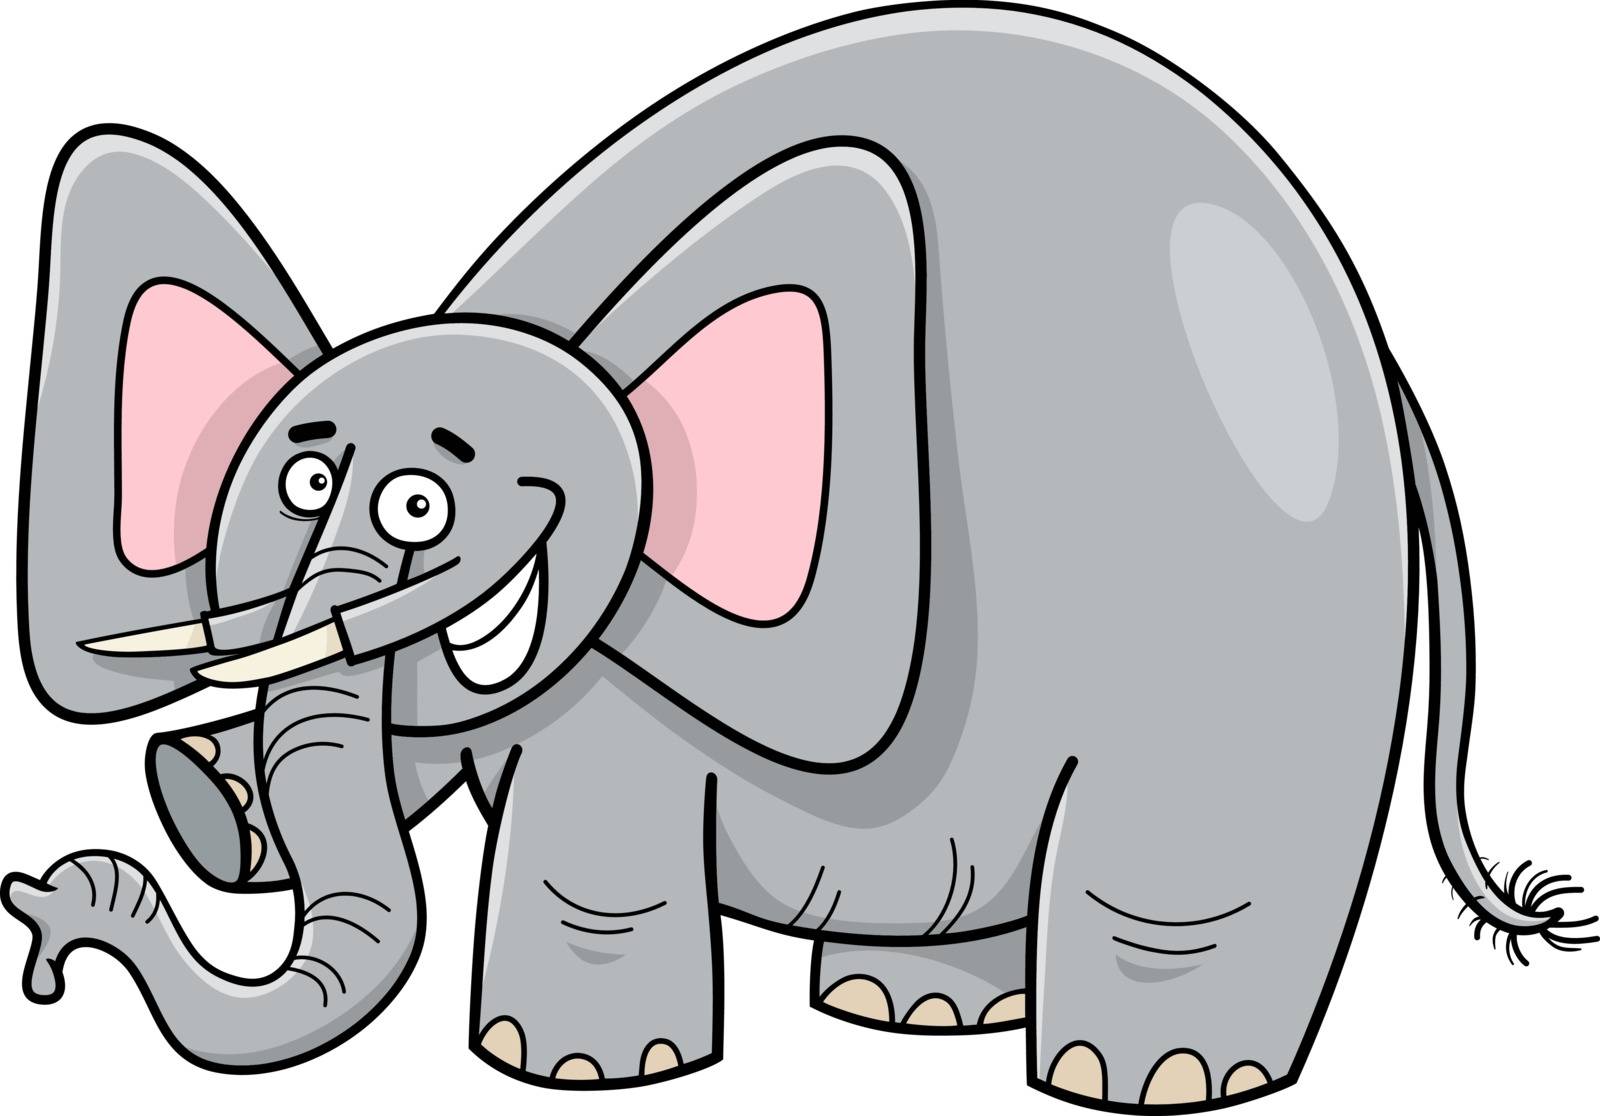 Cartoon Illustration of Elephant Animal Character